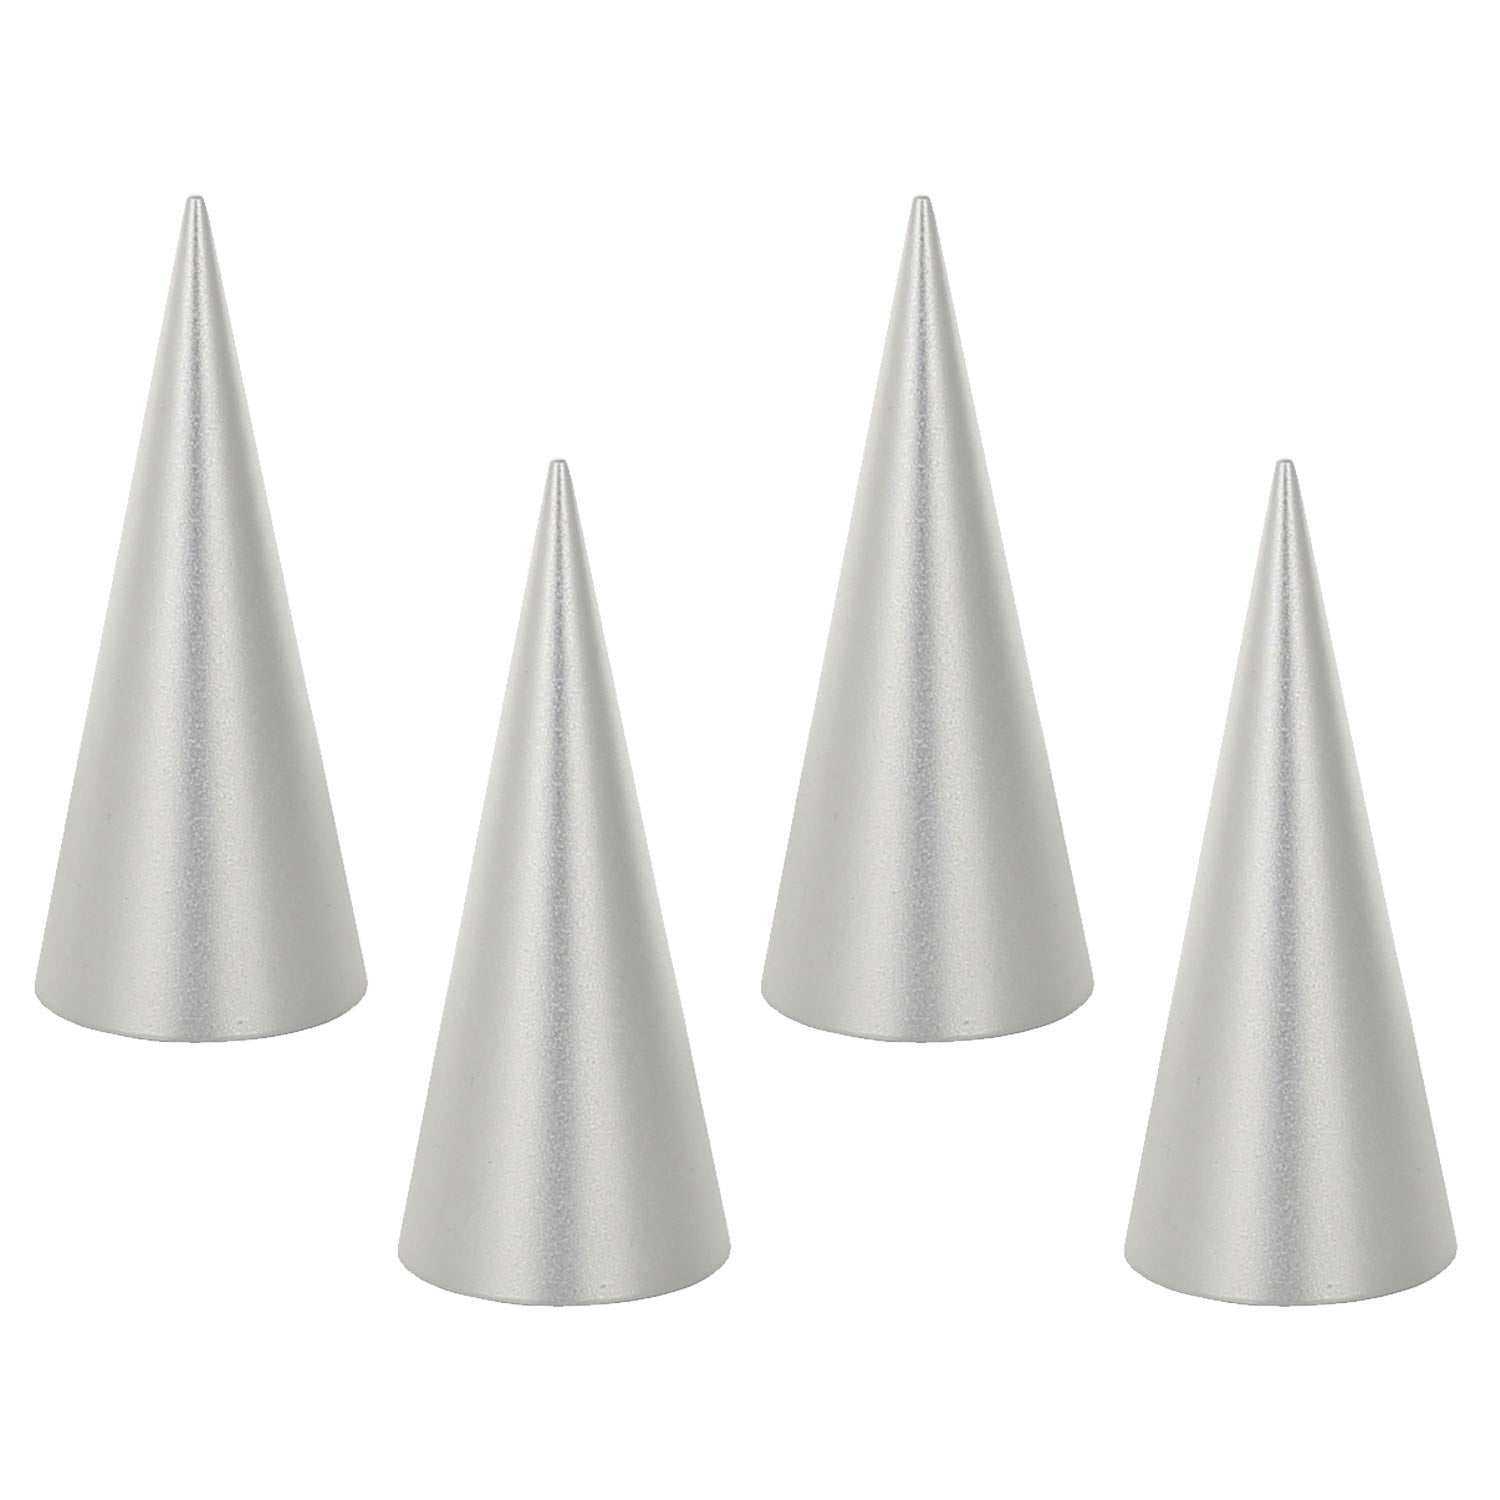 Single Ring Aluminum Cone Display - Set of 4